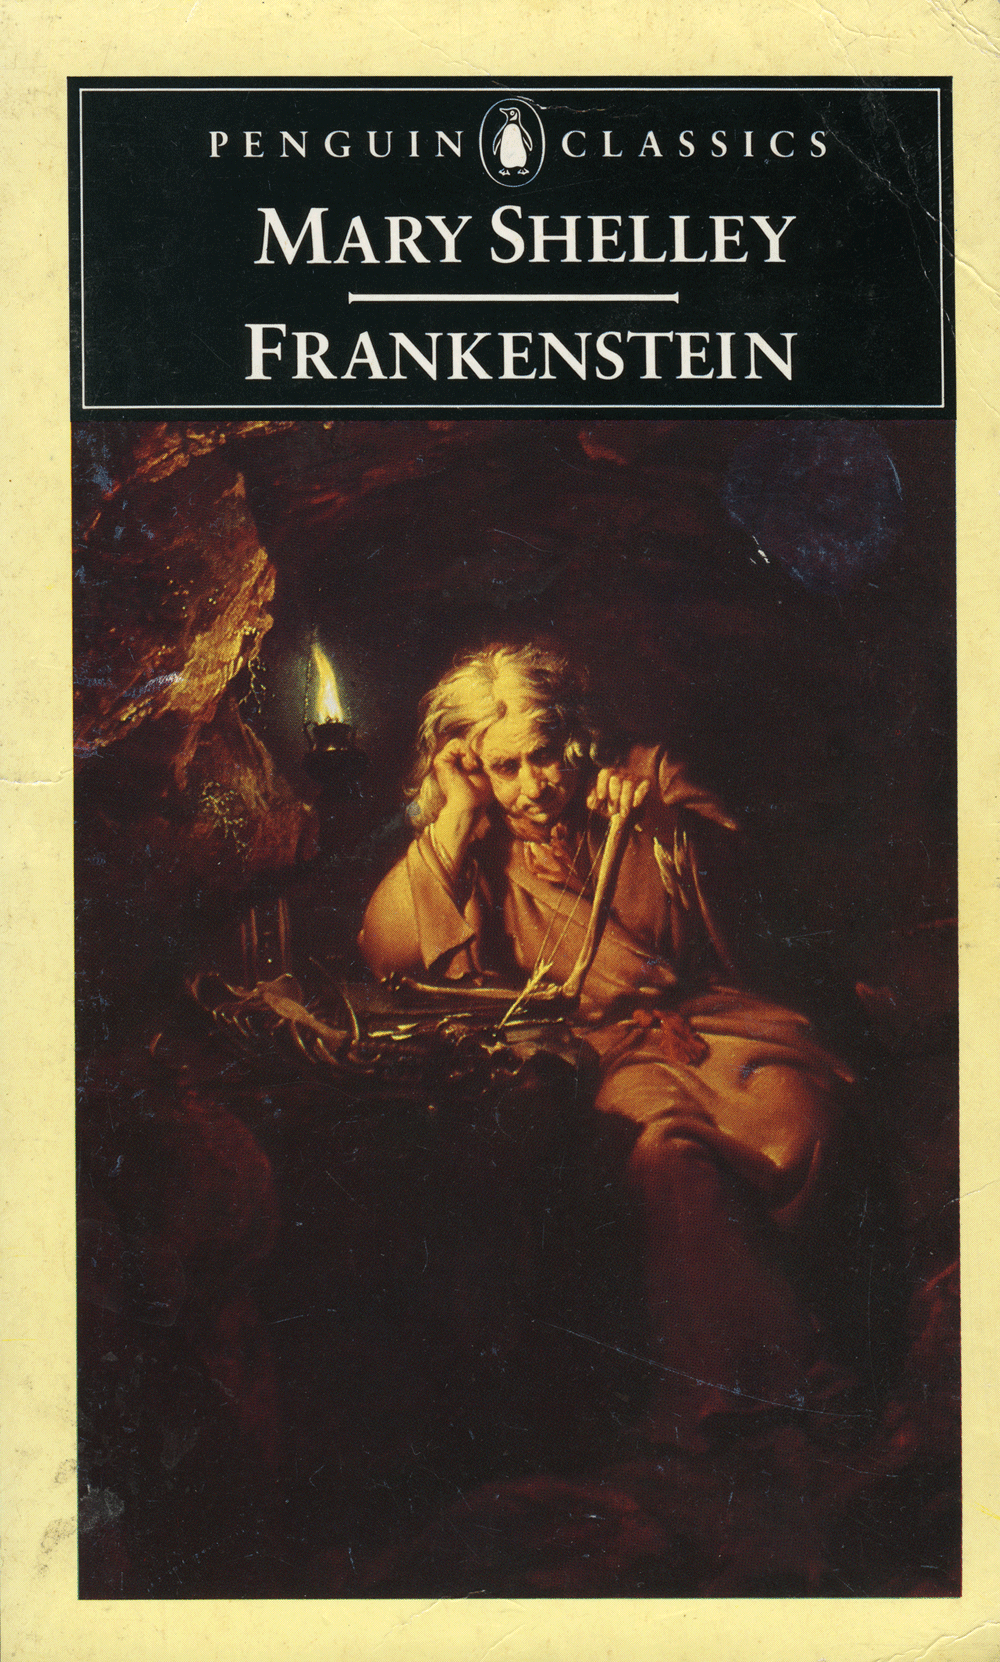 Frankenstein book cover.